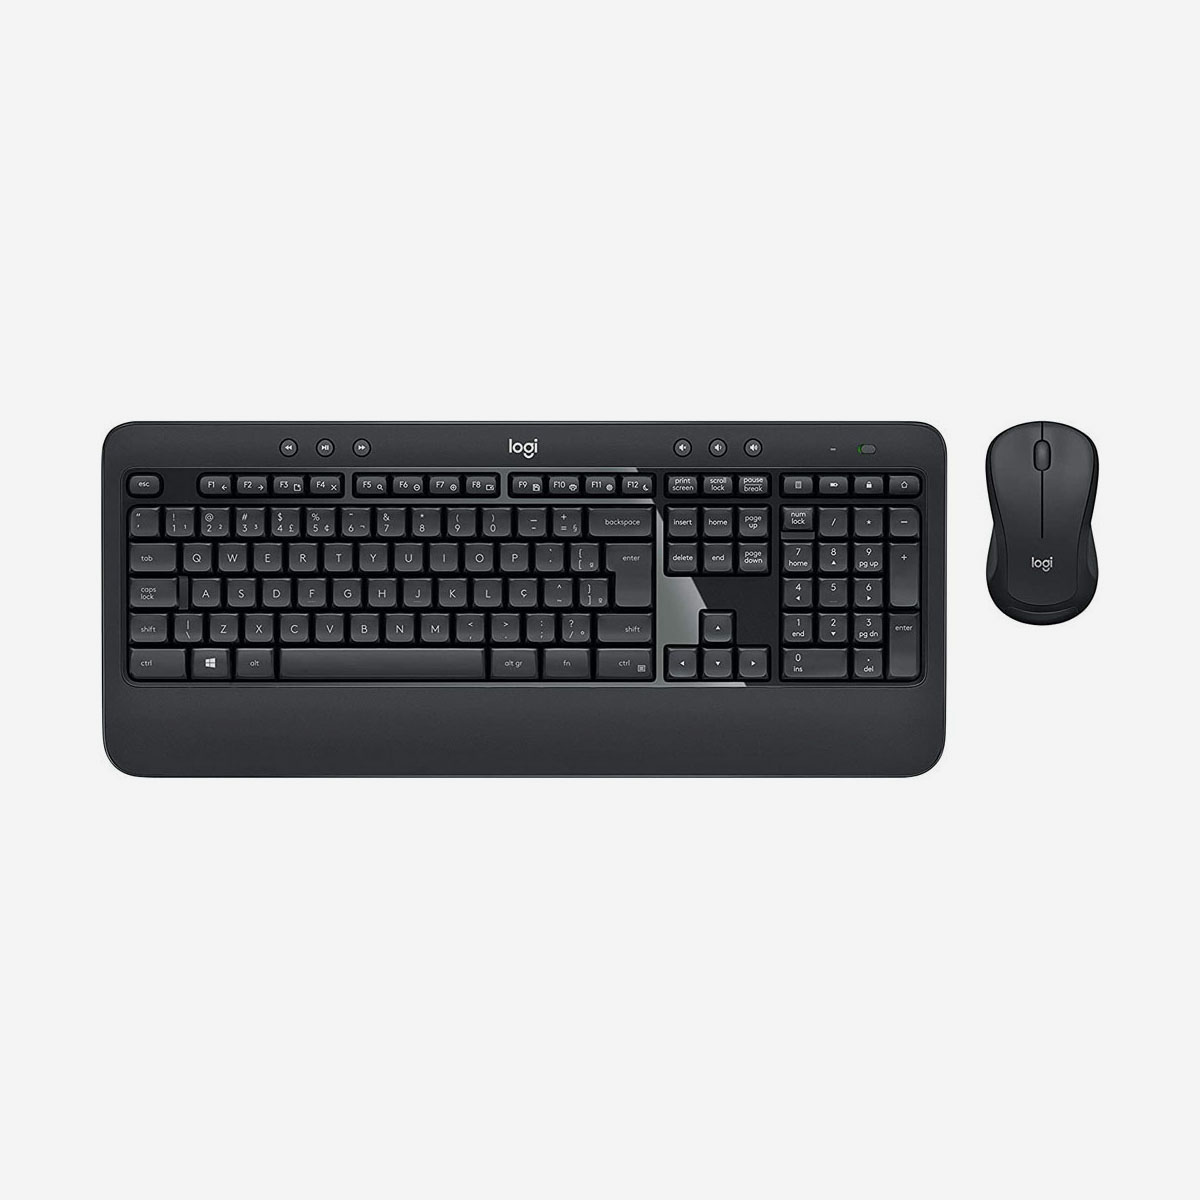 shop43-keyboard-mouse (1)